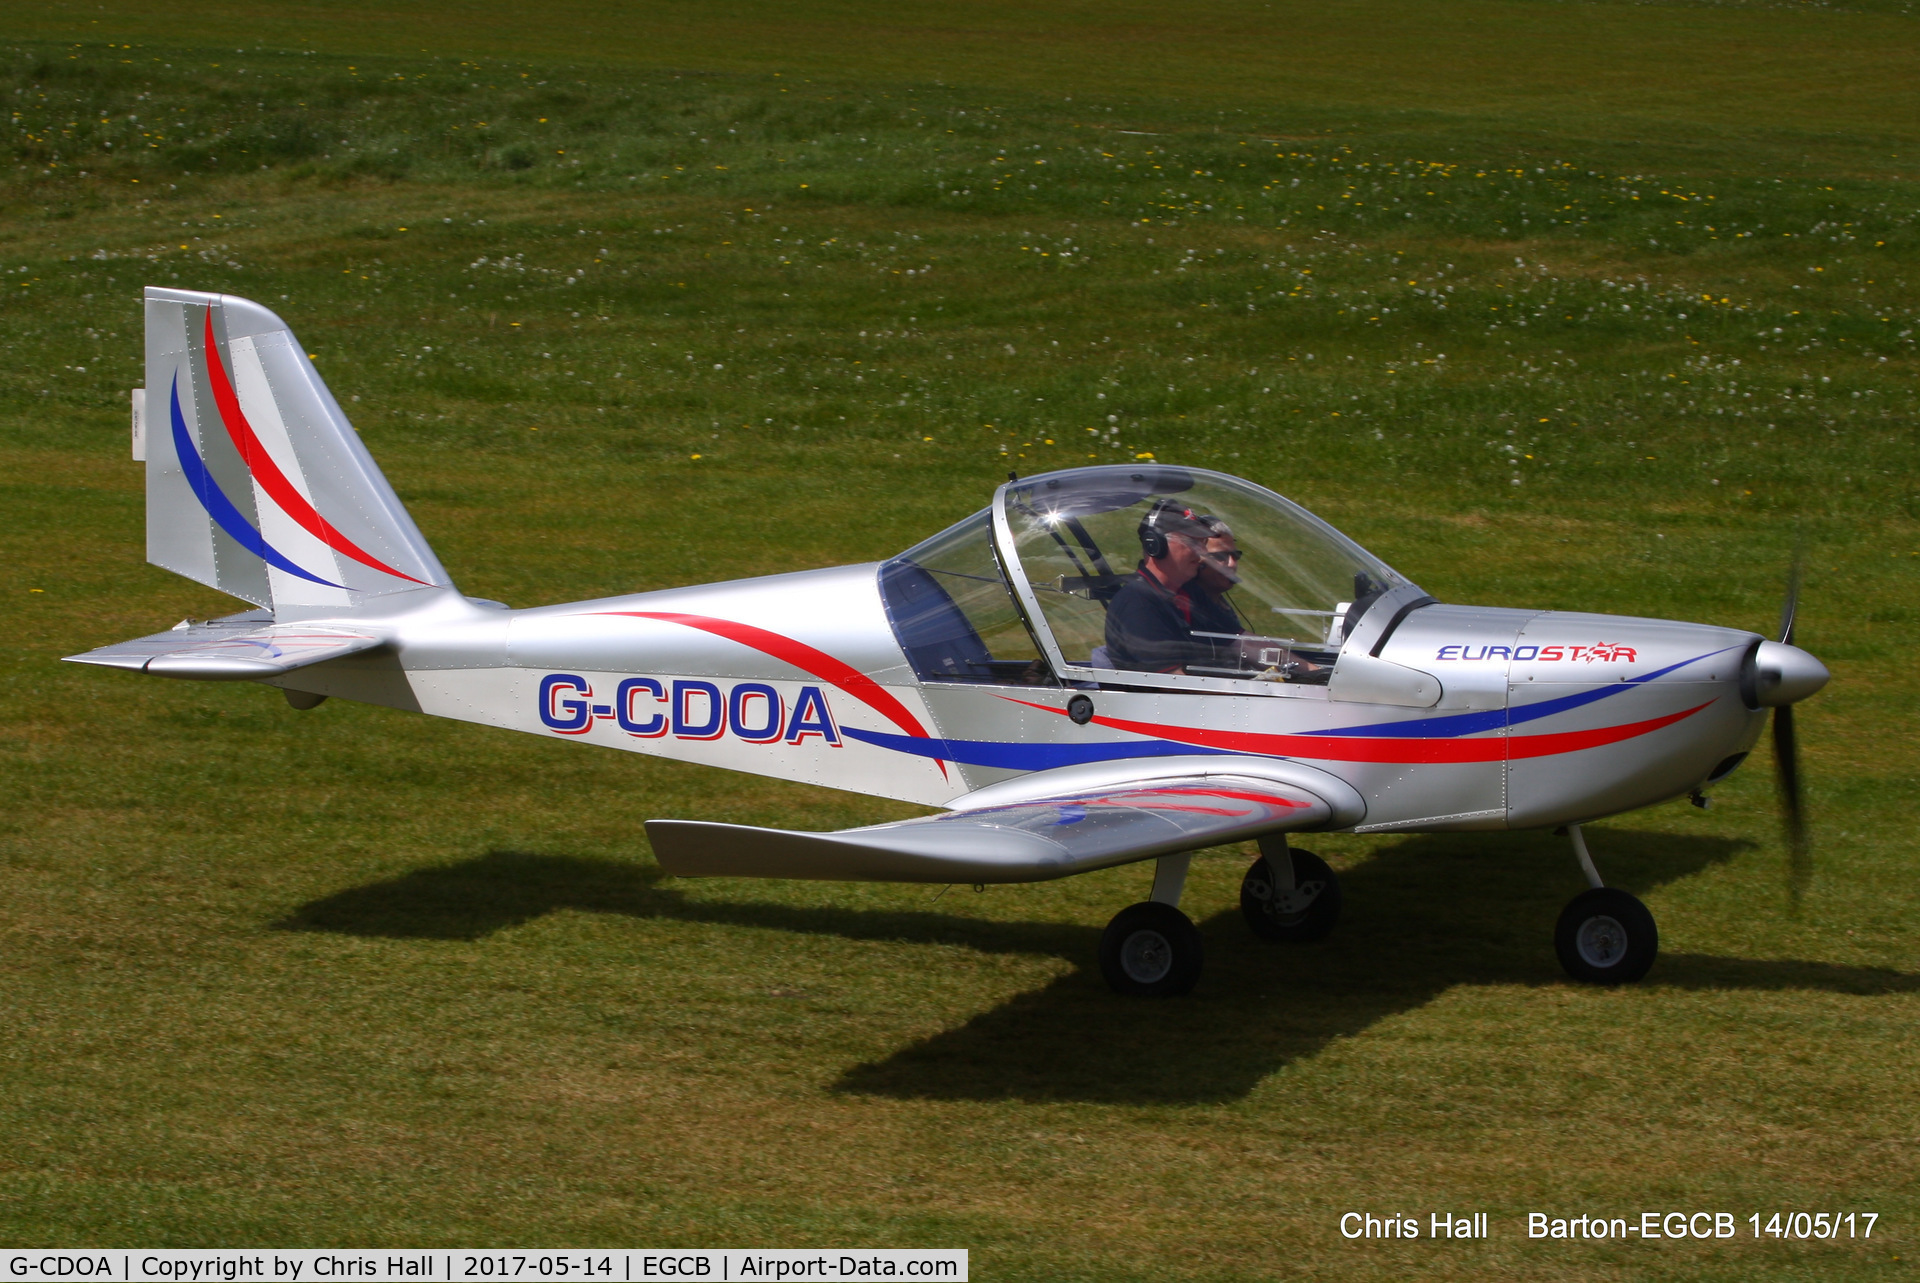 G-CDOA, 2005 Evektor-Aerotechnik EV-97 Teameurostar UK C/N 2506, at Barton